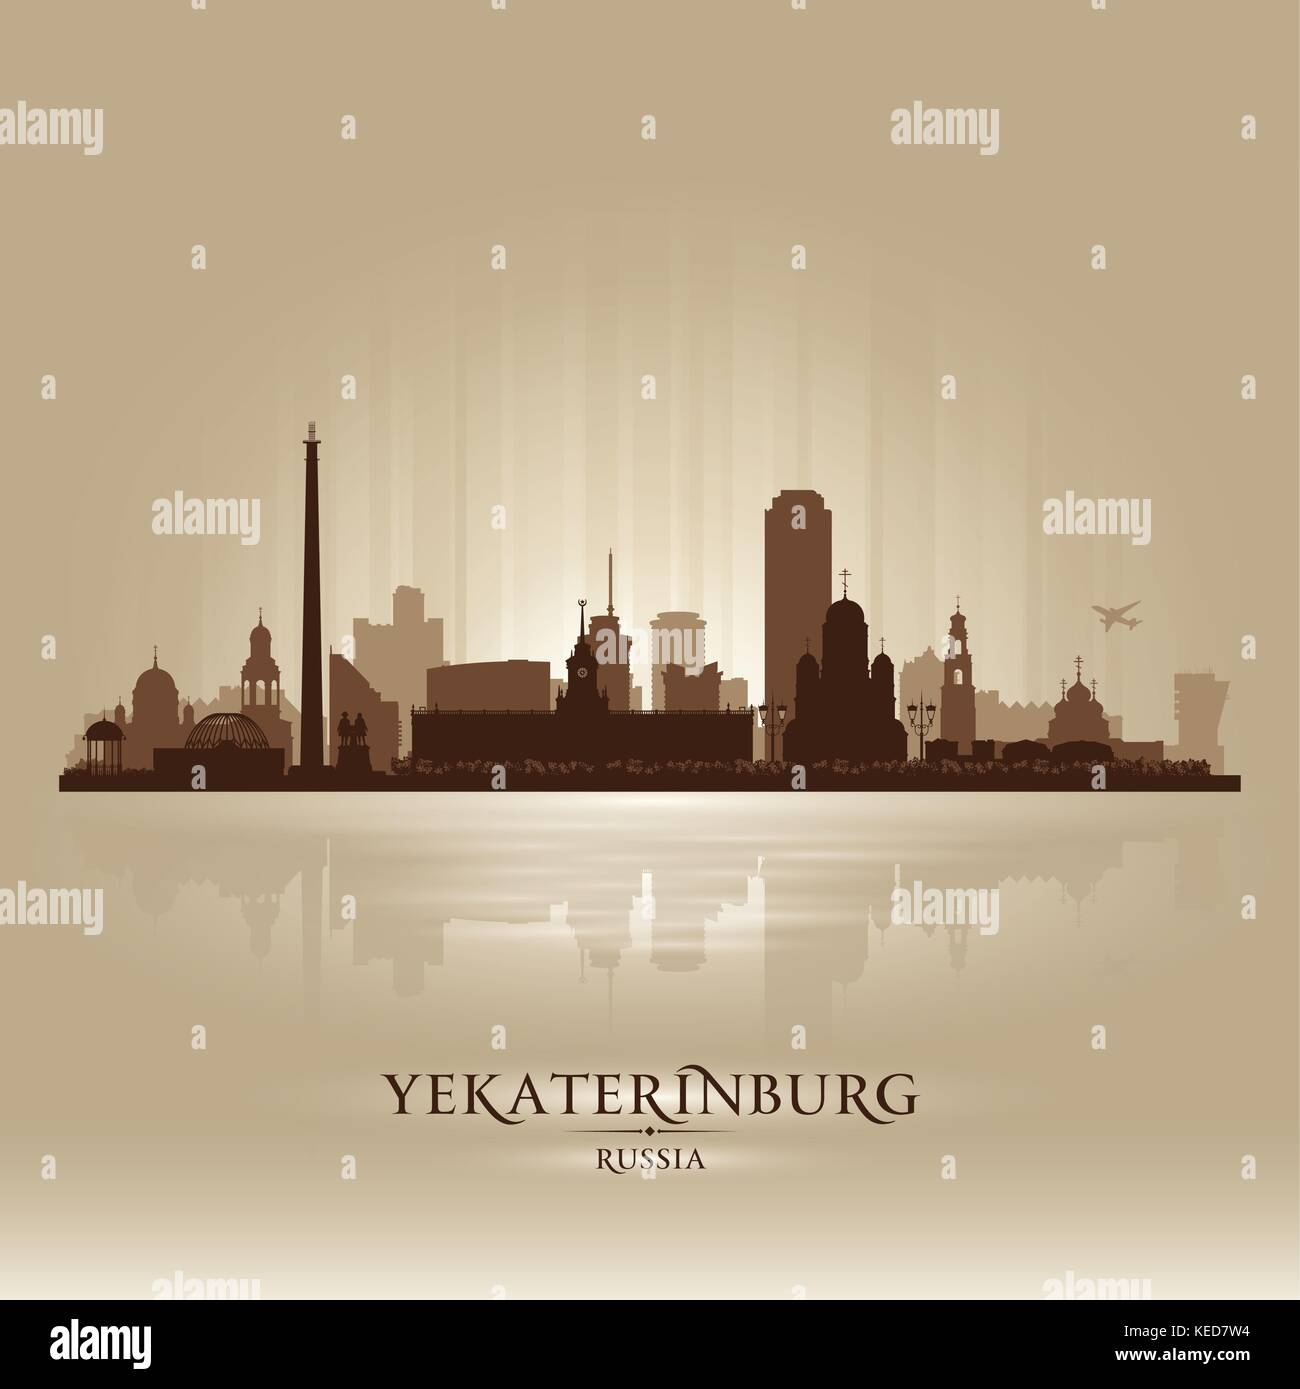 Yekaterinburg Russia skyline city silhouette Vector illustration Stock Vector